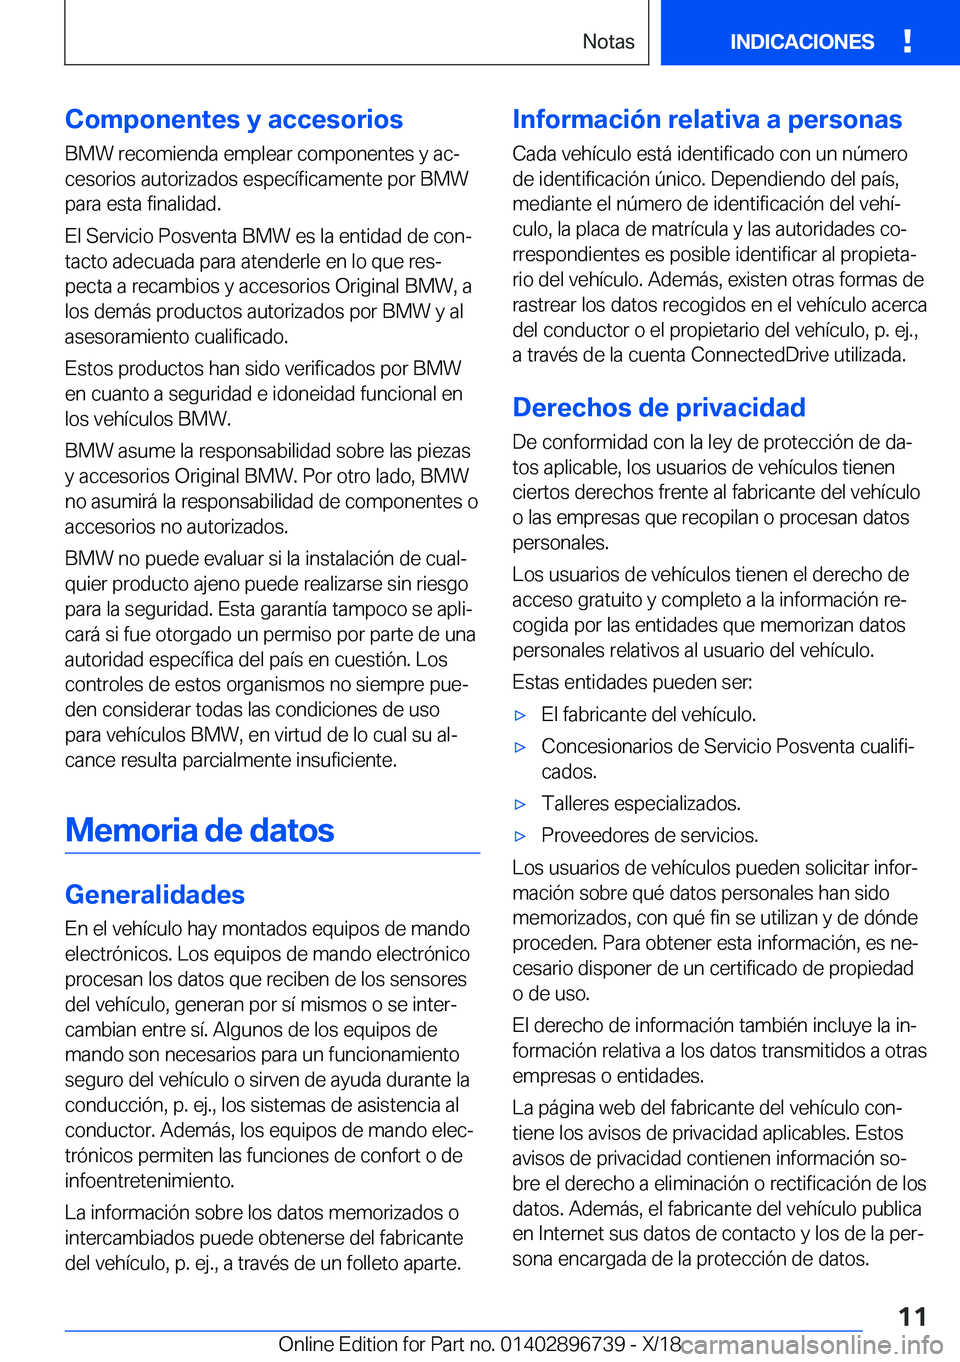 BMW X5 2019  Manuales de Empleo (in Spanish) �C�o�m�p�o�n�e�n�t�e�s��y��a�c�c�e�s�o�r�i�o�s�B�M�W��r�e�c�o�m�i�e�n�d�a��e�m�p�l�e�a�r��c�o�m�p�o�n�e�n�t�e�s��y��a�cª
�c�e�s�o�r�i�o�s��a�u�t�o�r�i�z�a�d�o�s��e�s�p�e�c�